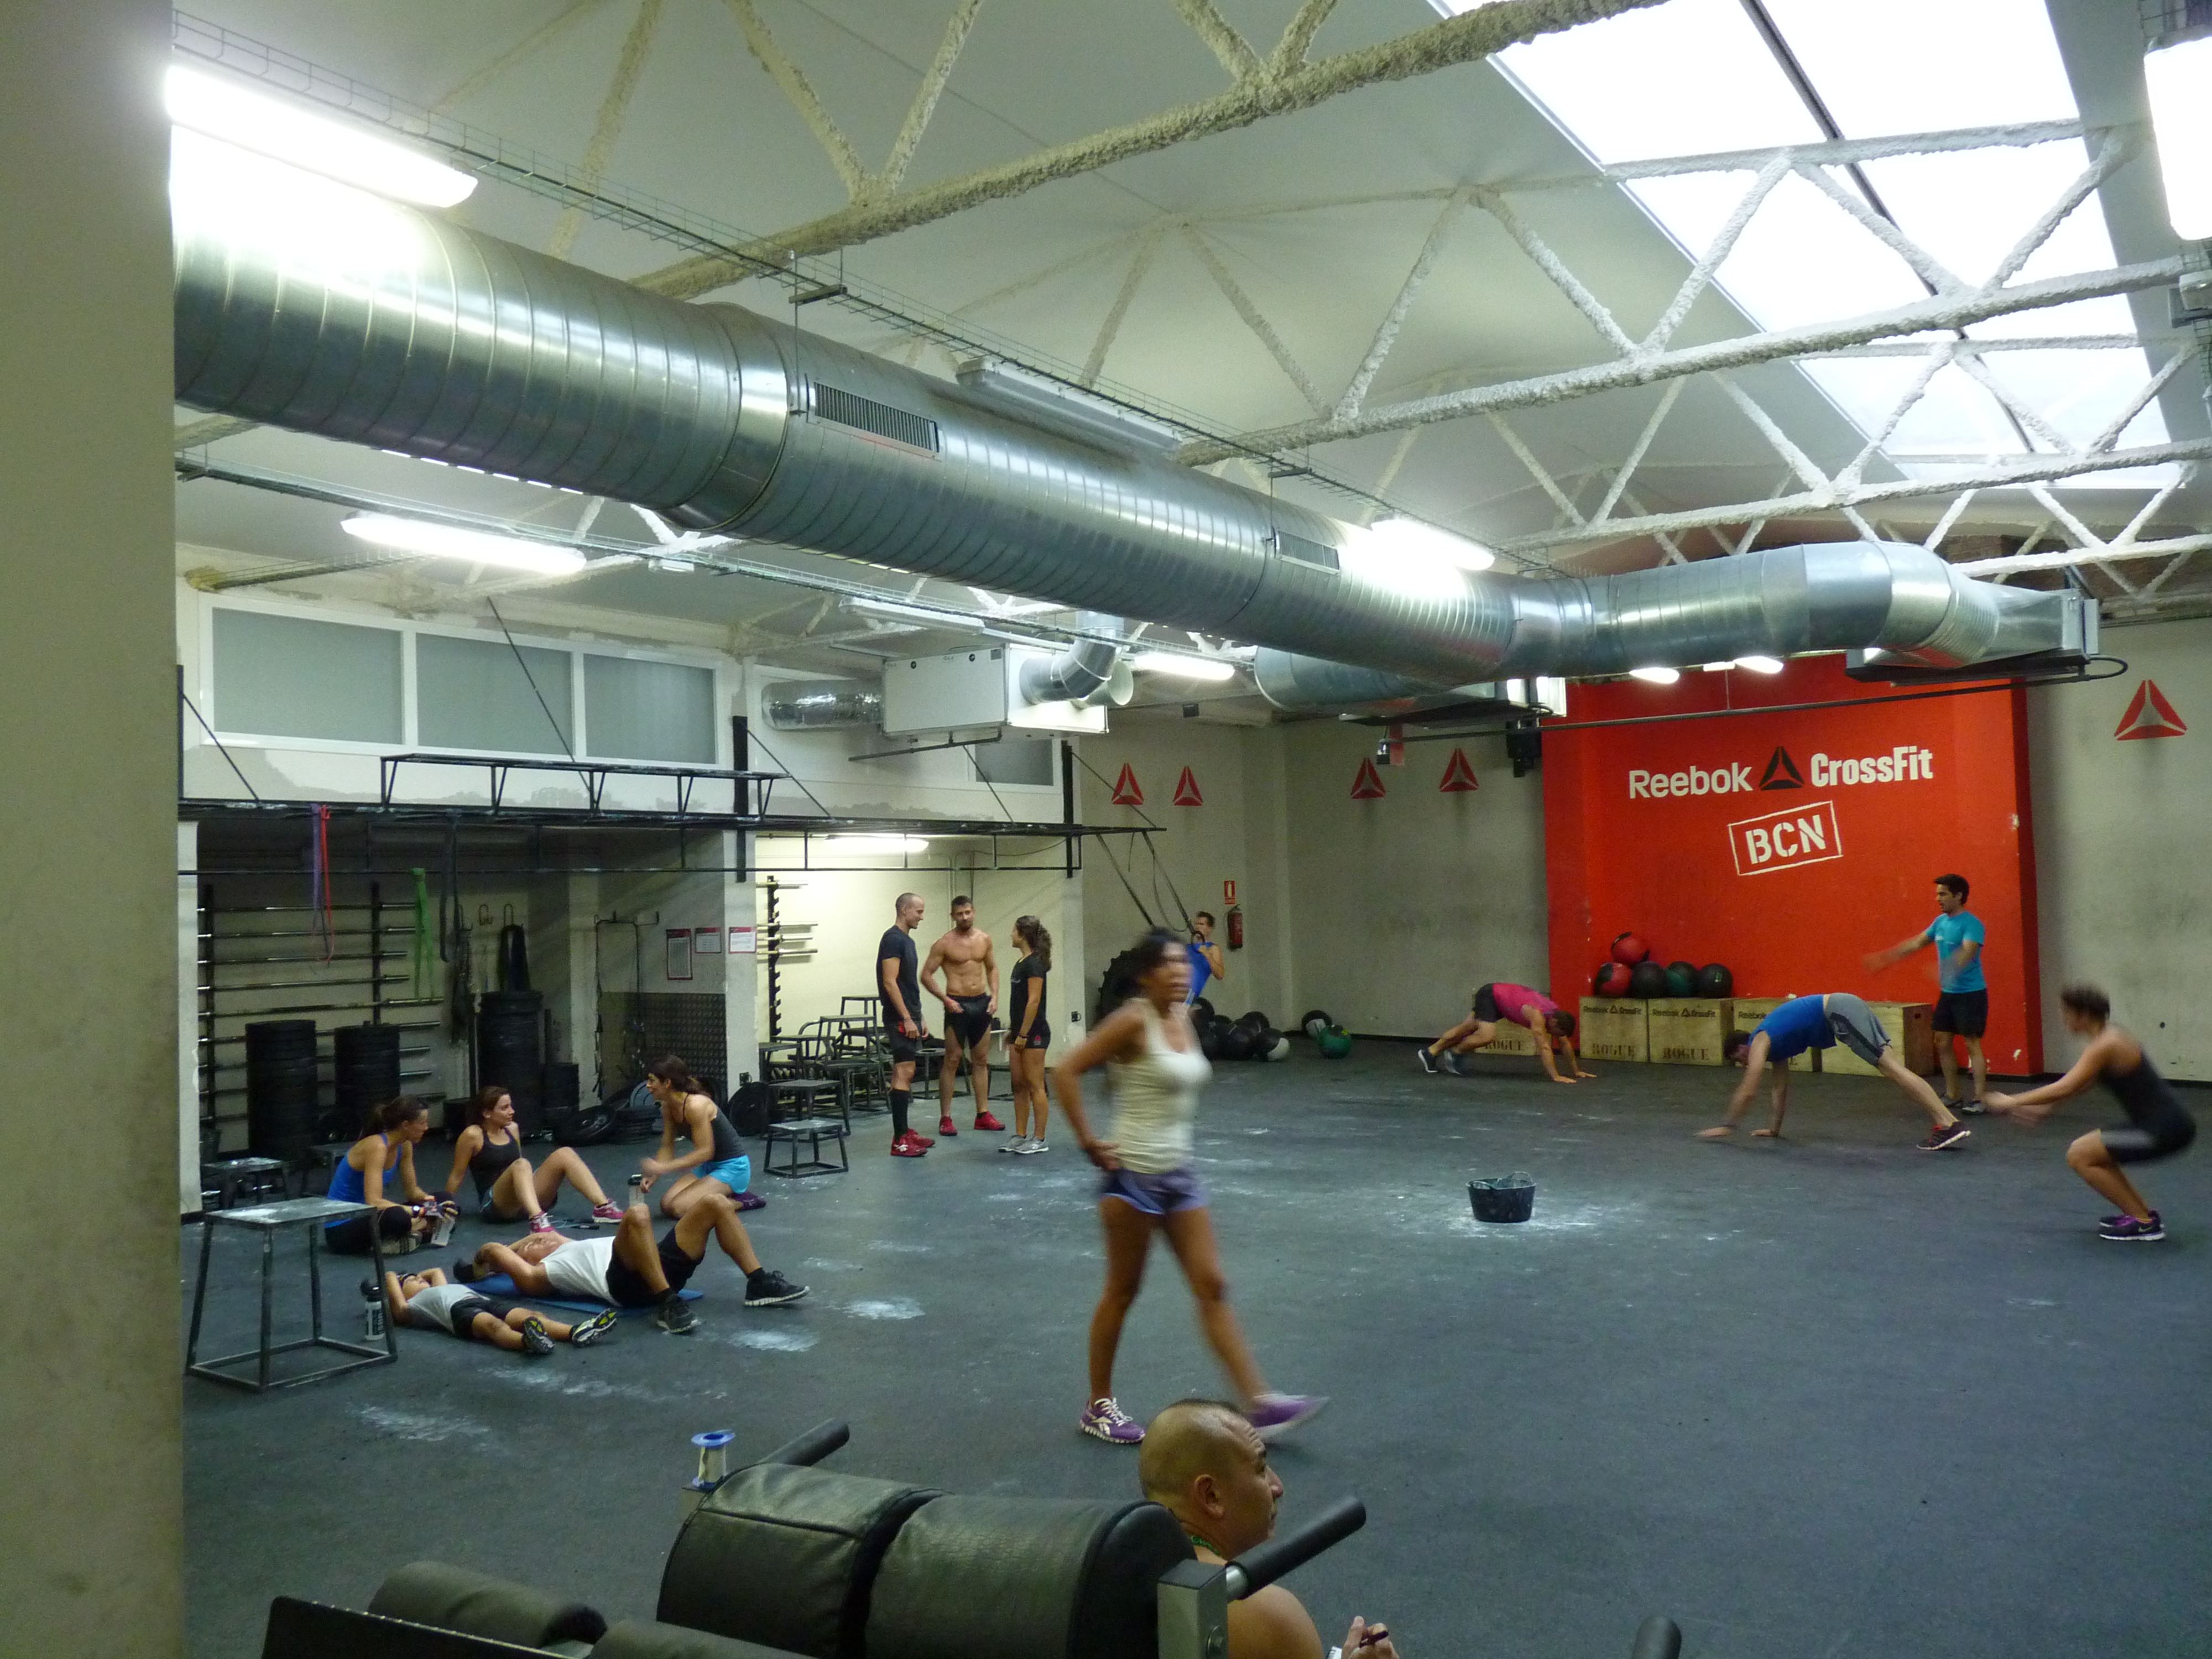 Review: Reebok CrossFit BCN. Barcelona, Spain. | Box Jumping